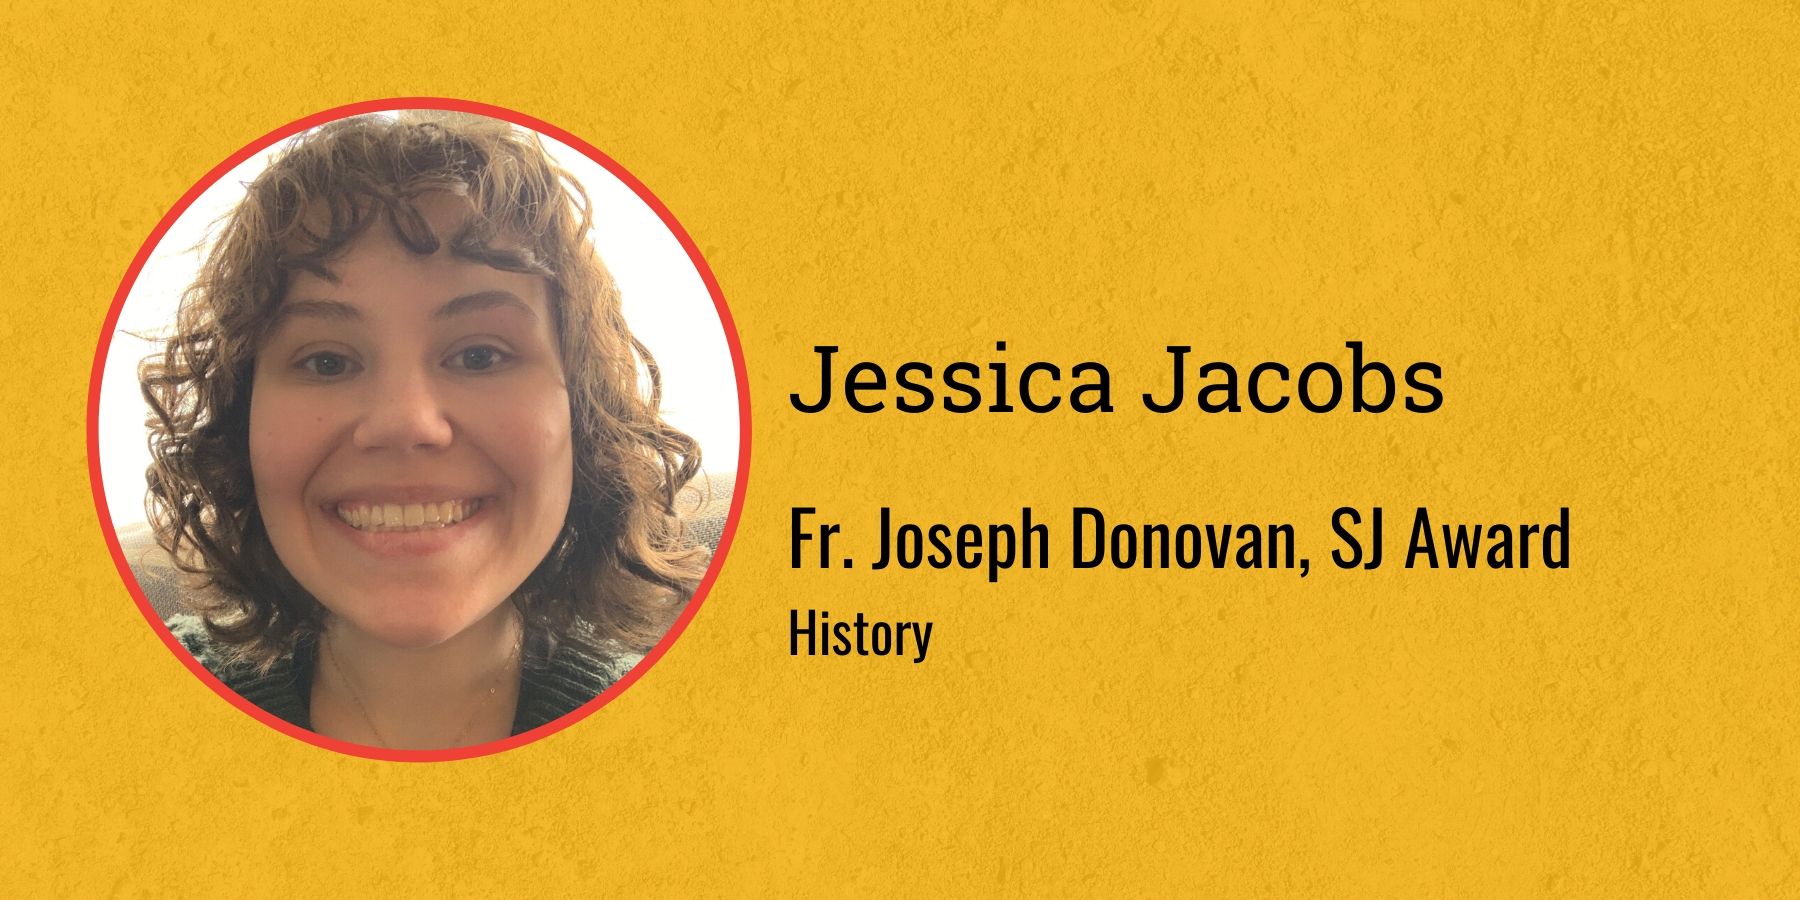 Photo of Jessica Jacobs and text Fr. Joseph Donovan, S.J. Award, History